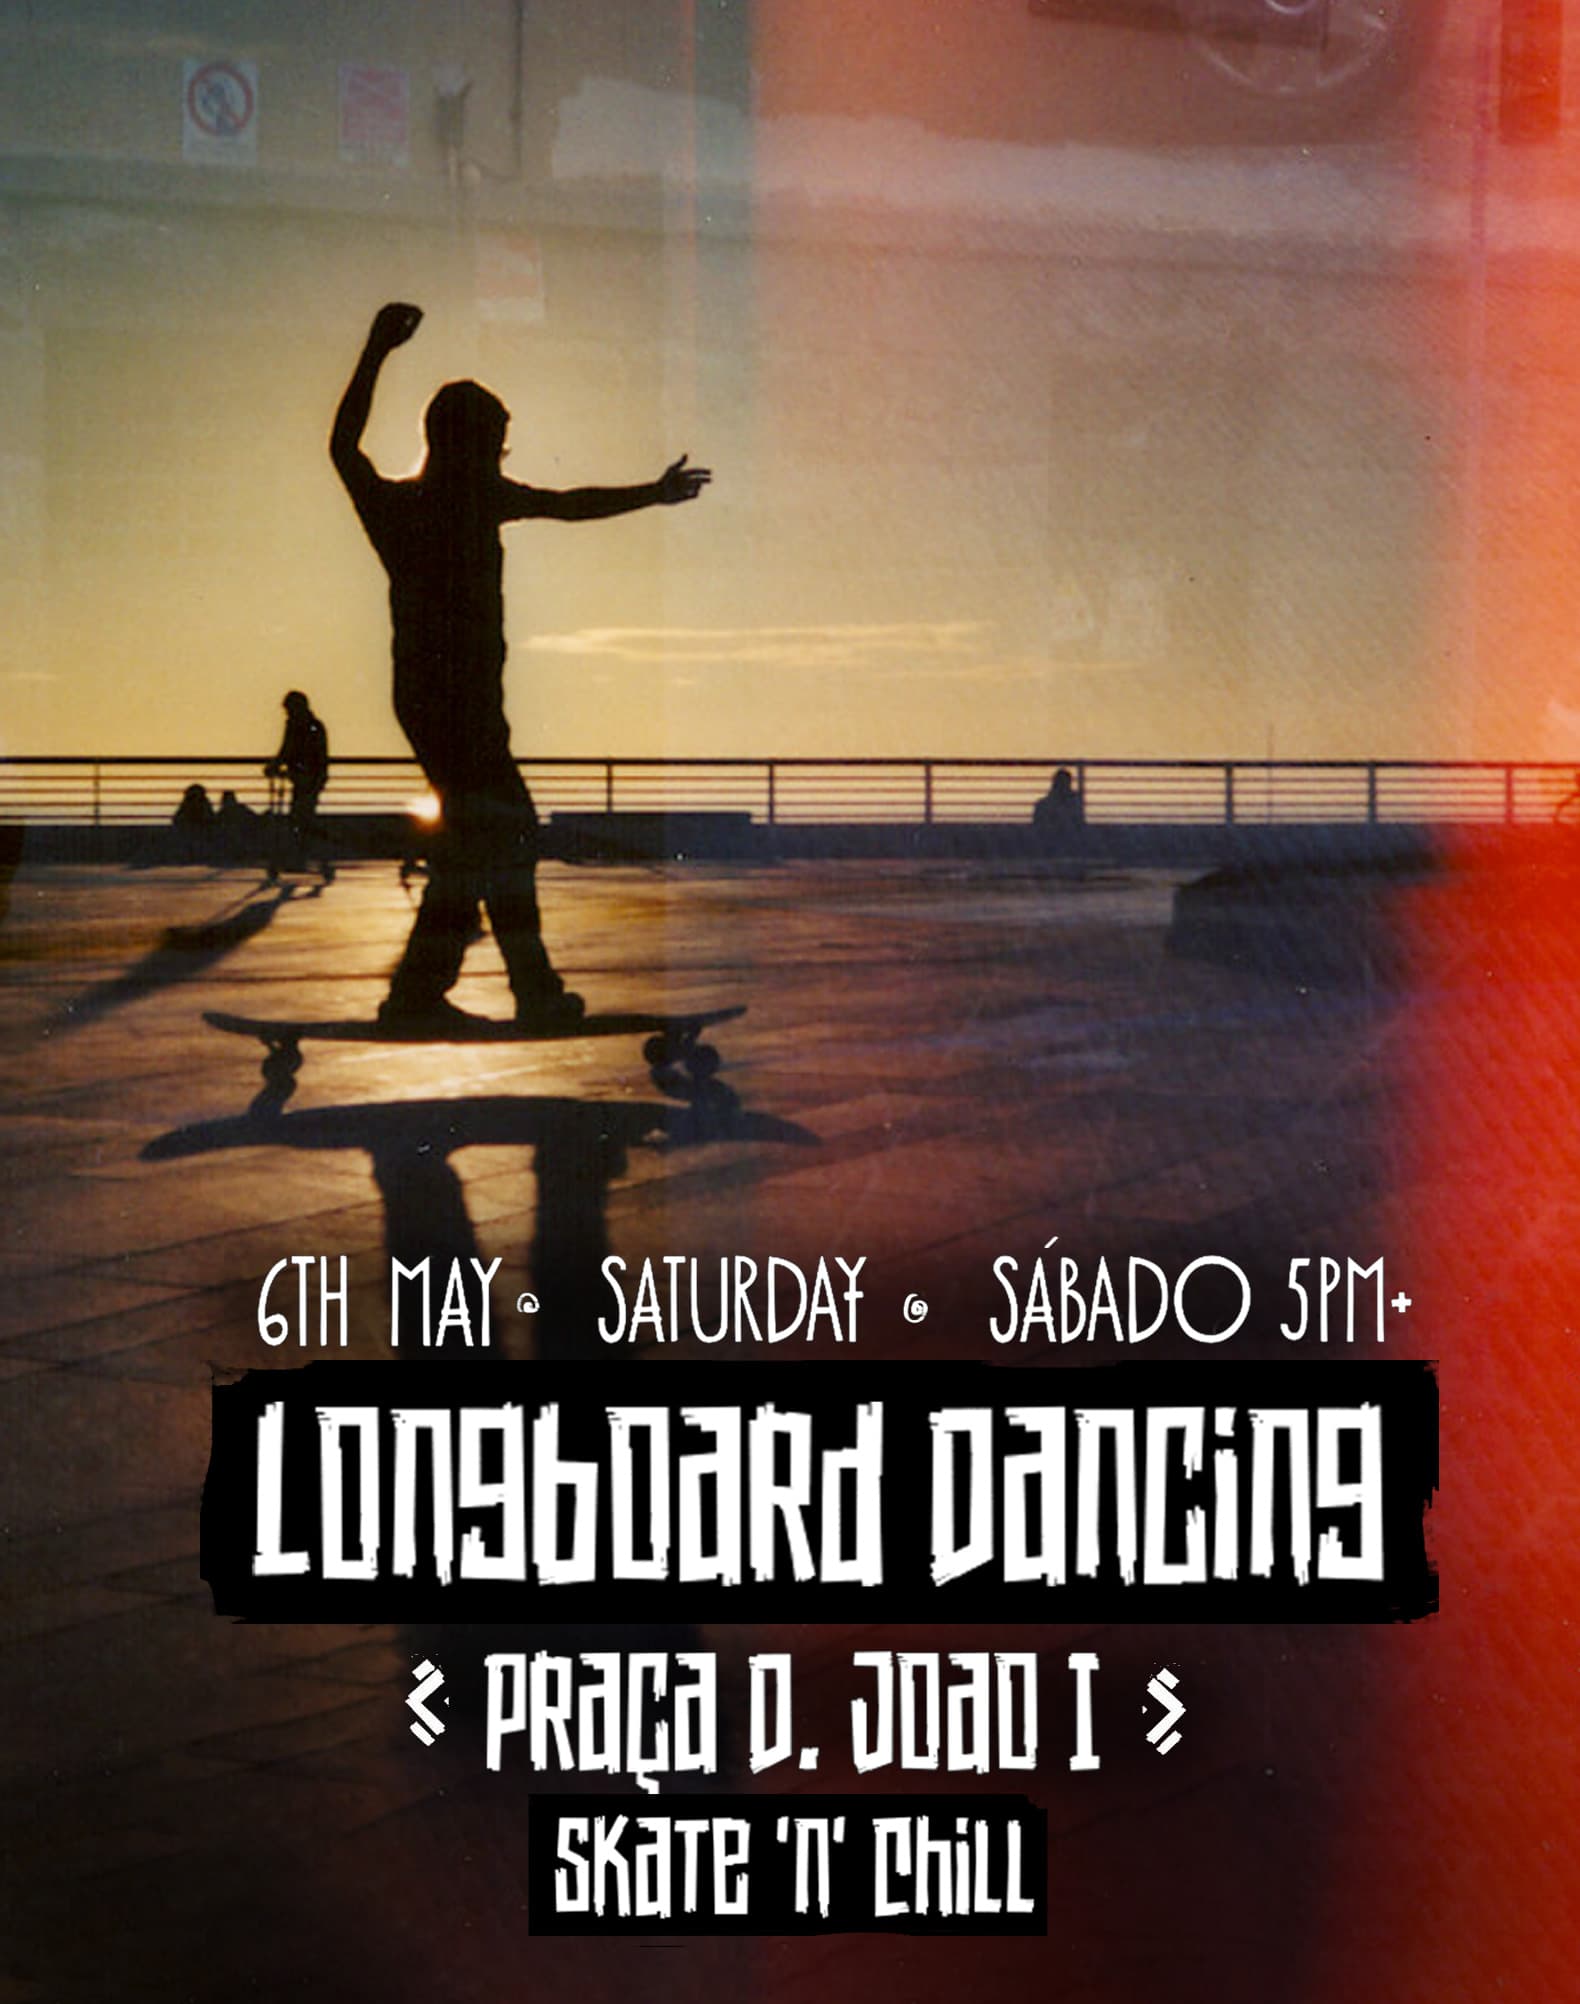 Longboard Dancing - Skate 'n' Chill Session